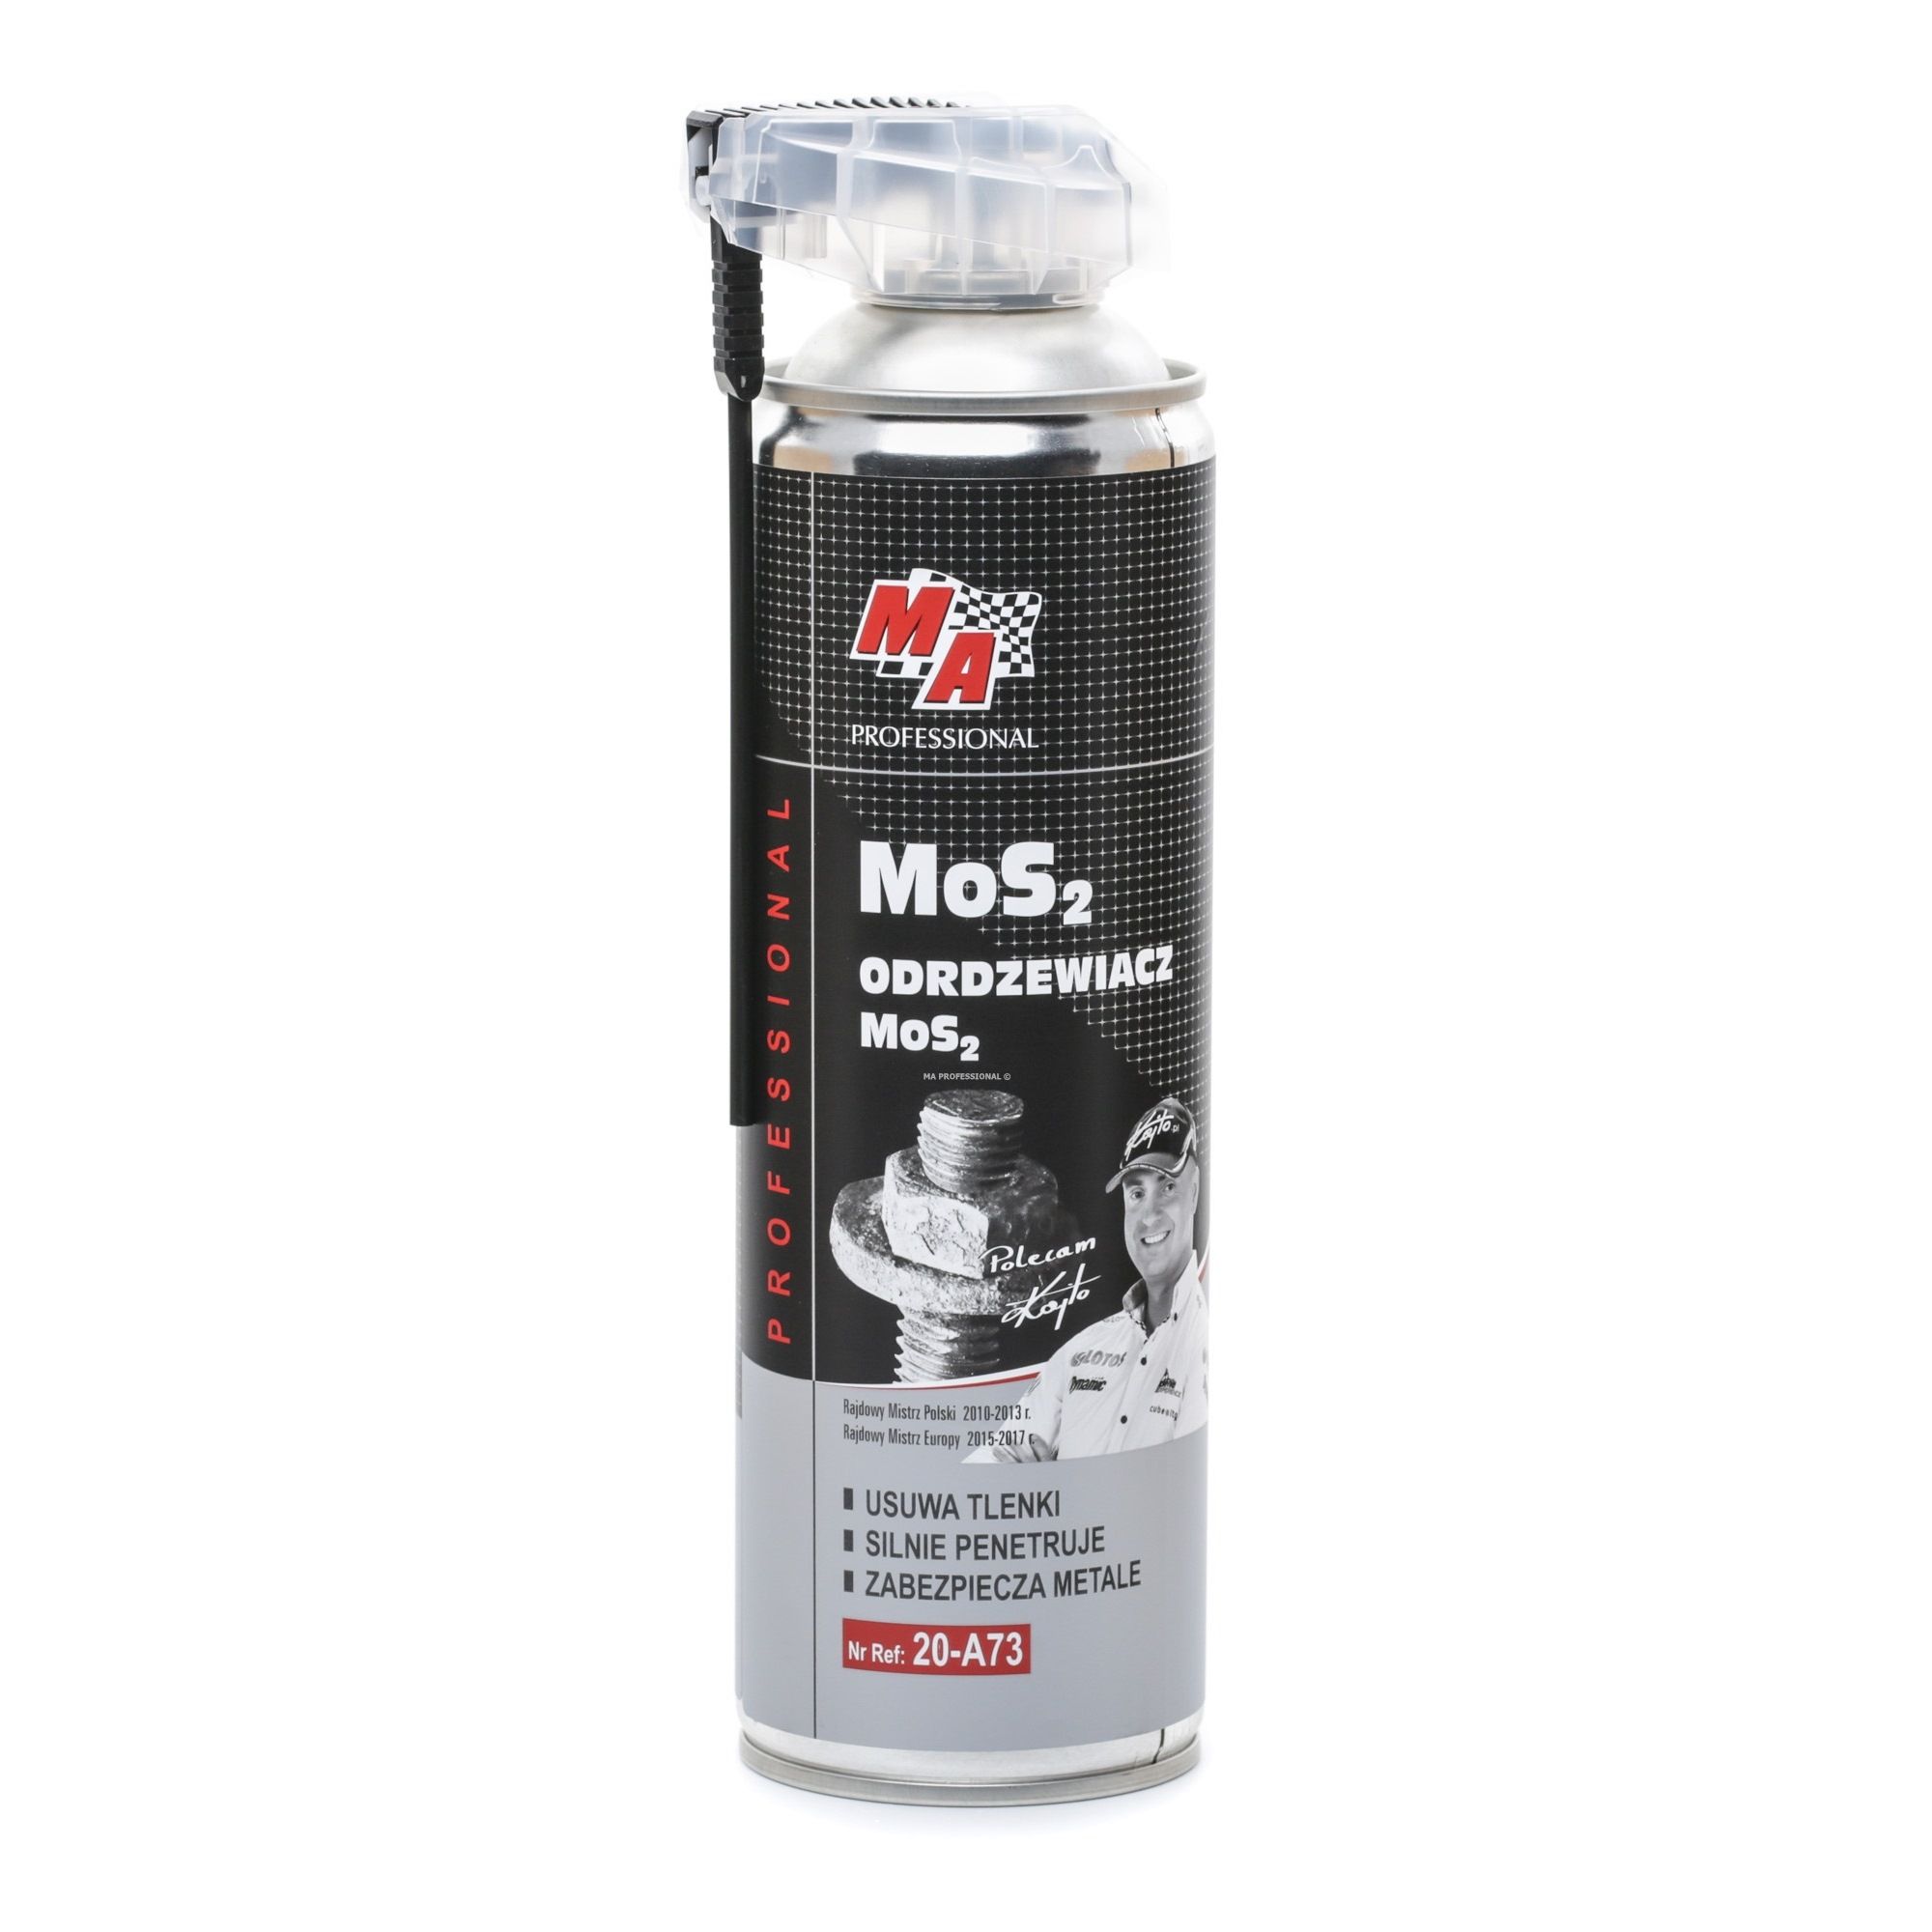 MA PROFESSIONAL 20A73 Technical sprays